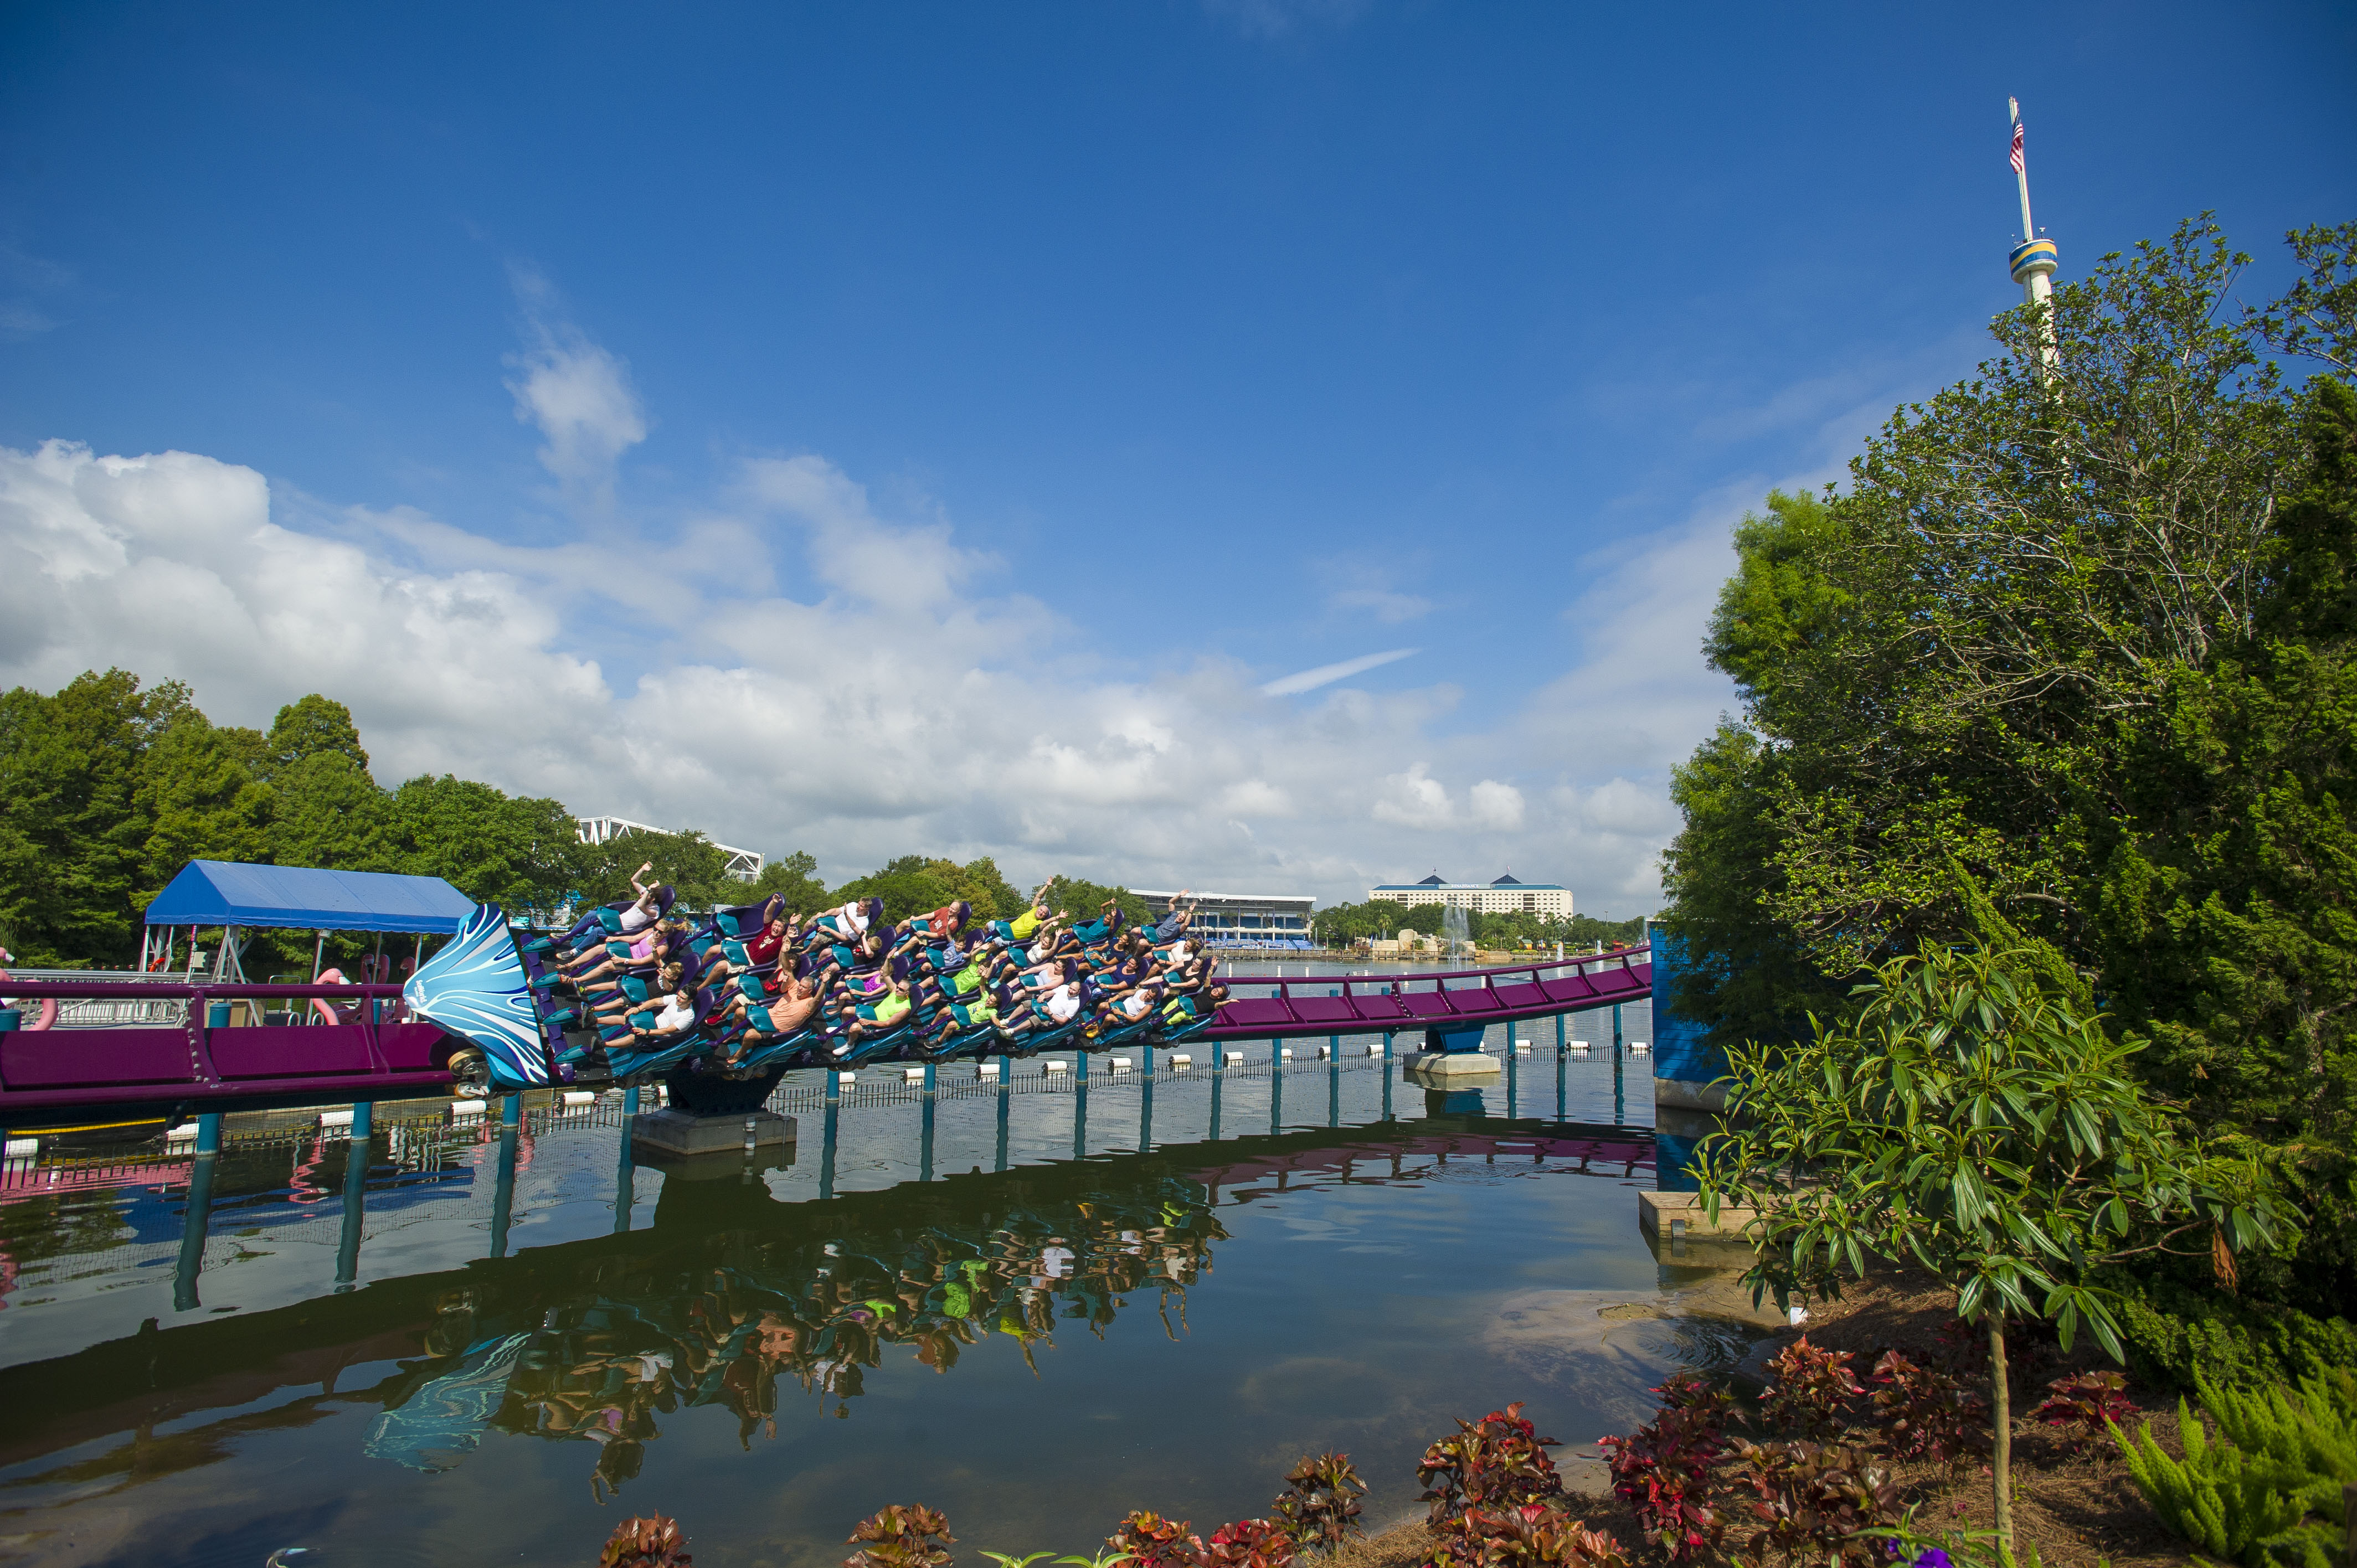 Orlando's Tallest, Fastest and Longest Coaster! Mako now open at SeaWorld Orlando